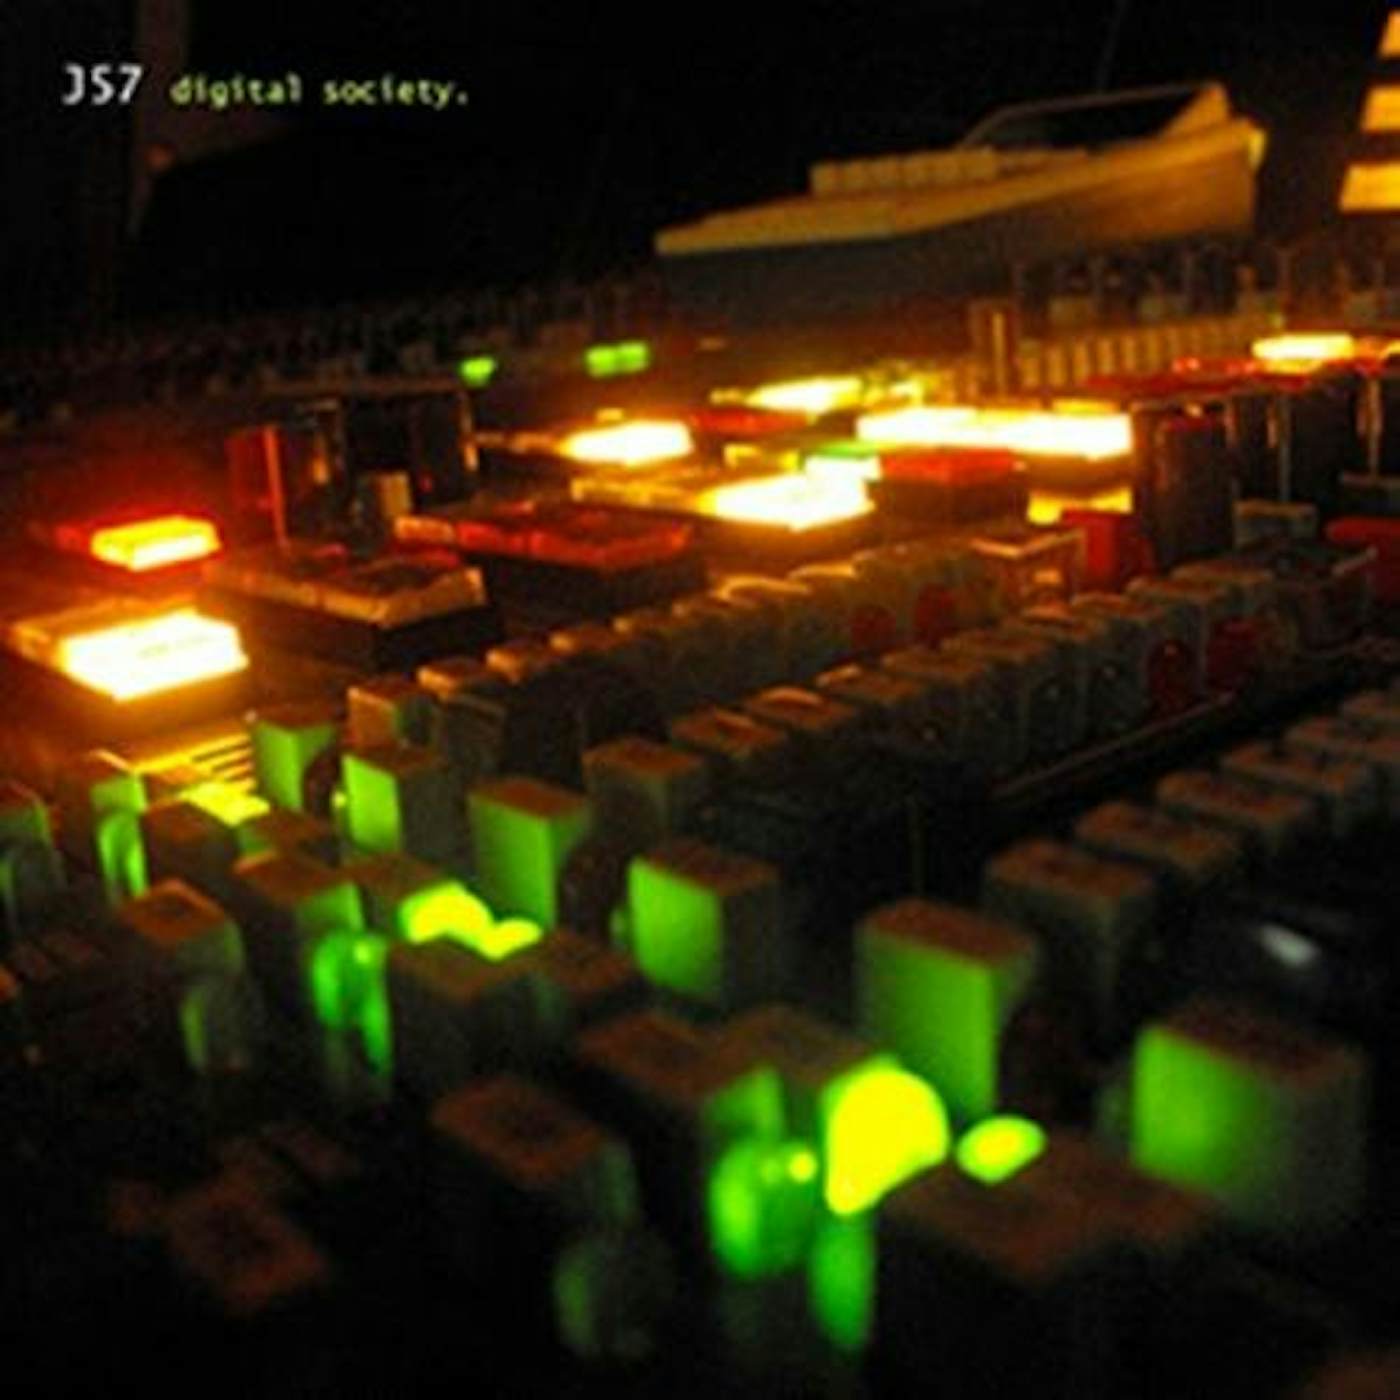 J57 DIGITAL SOCIETY CD